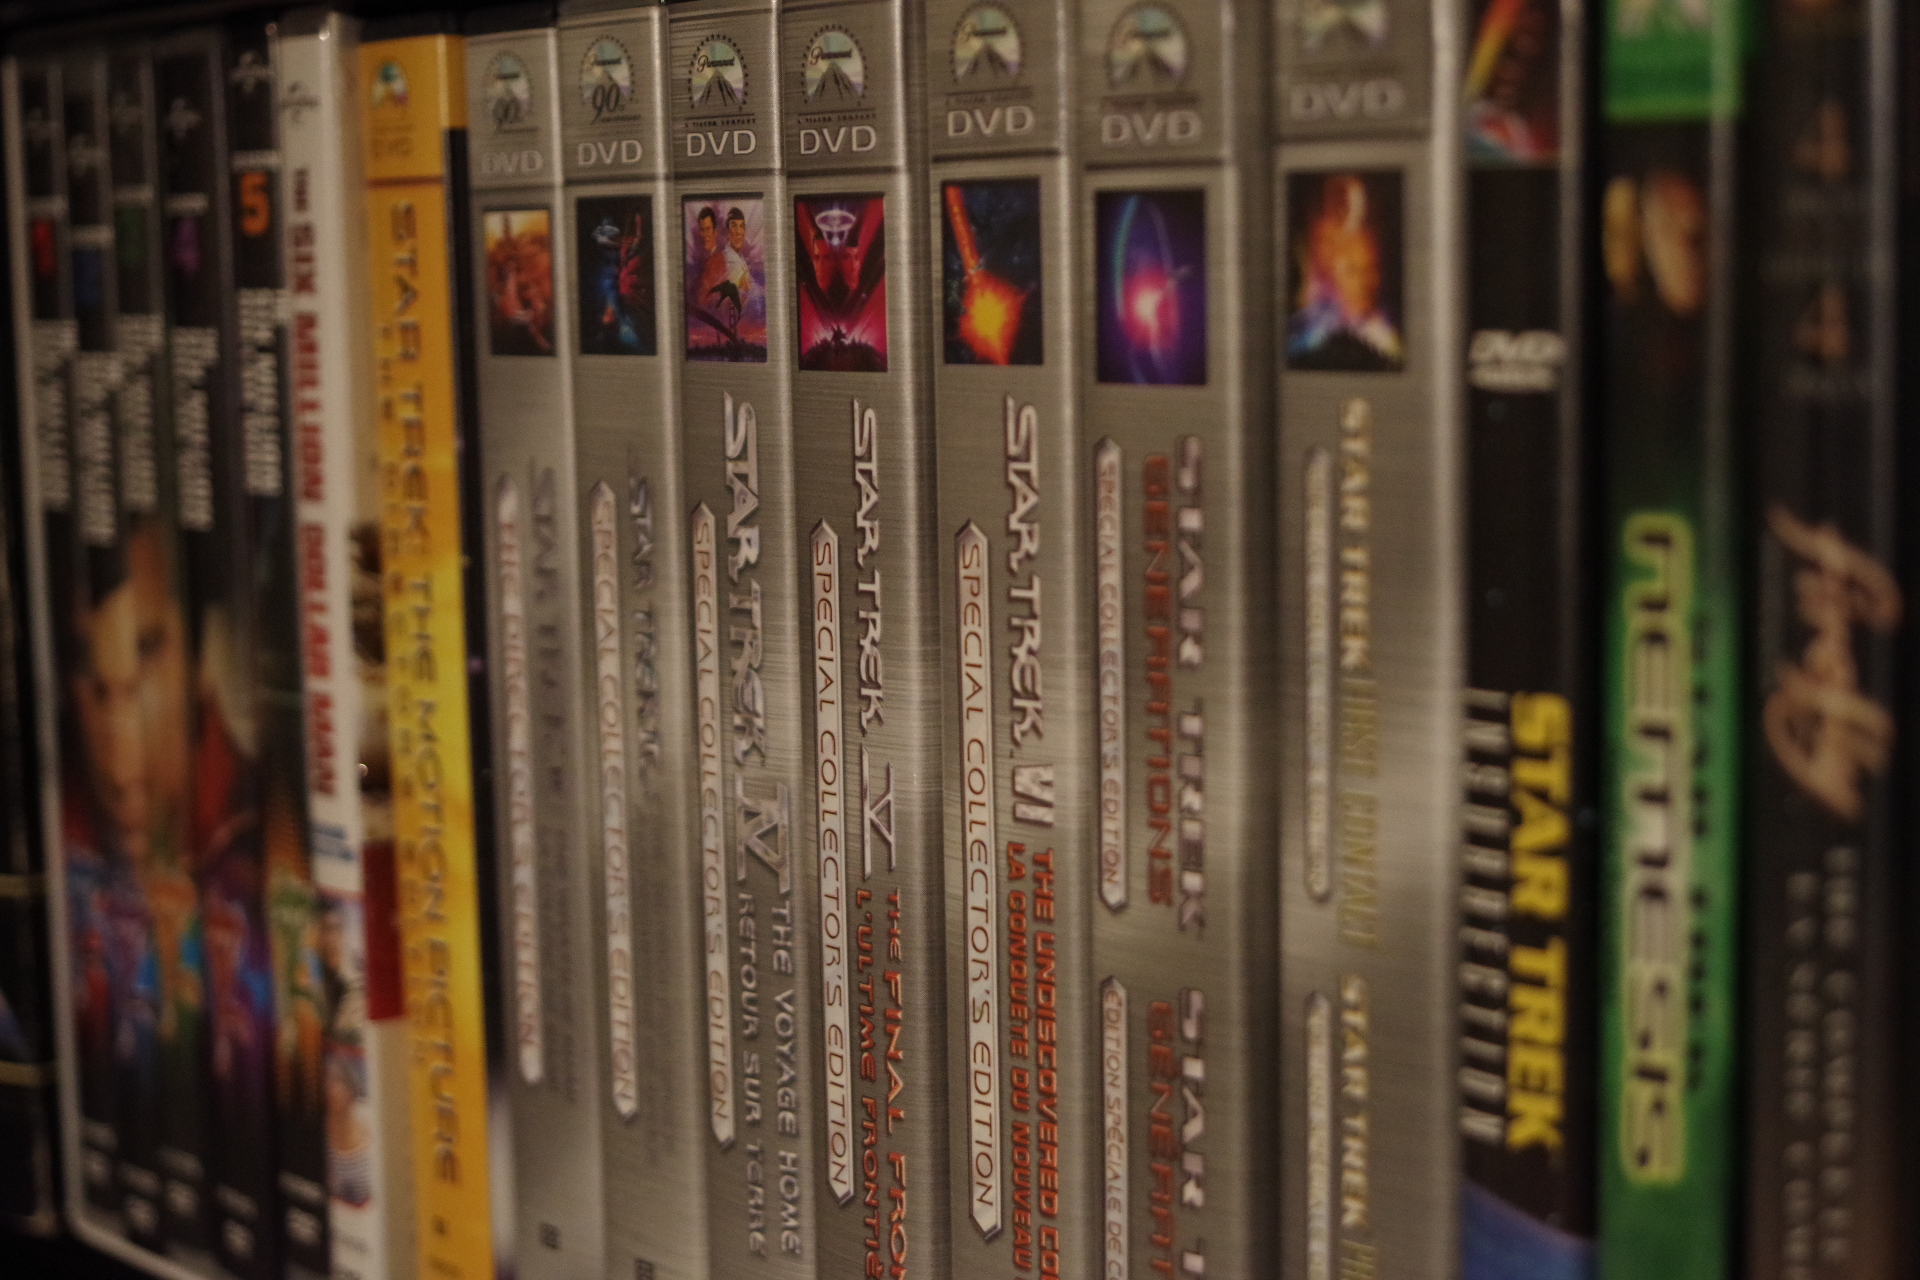 Star Trek and DVDs